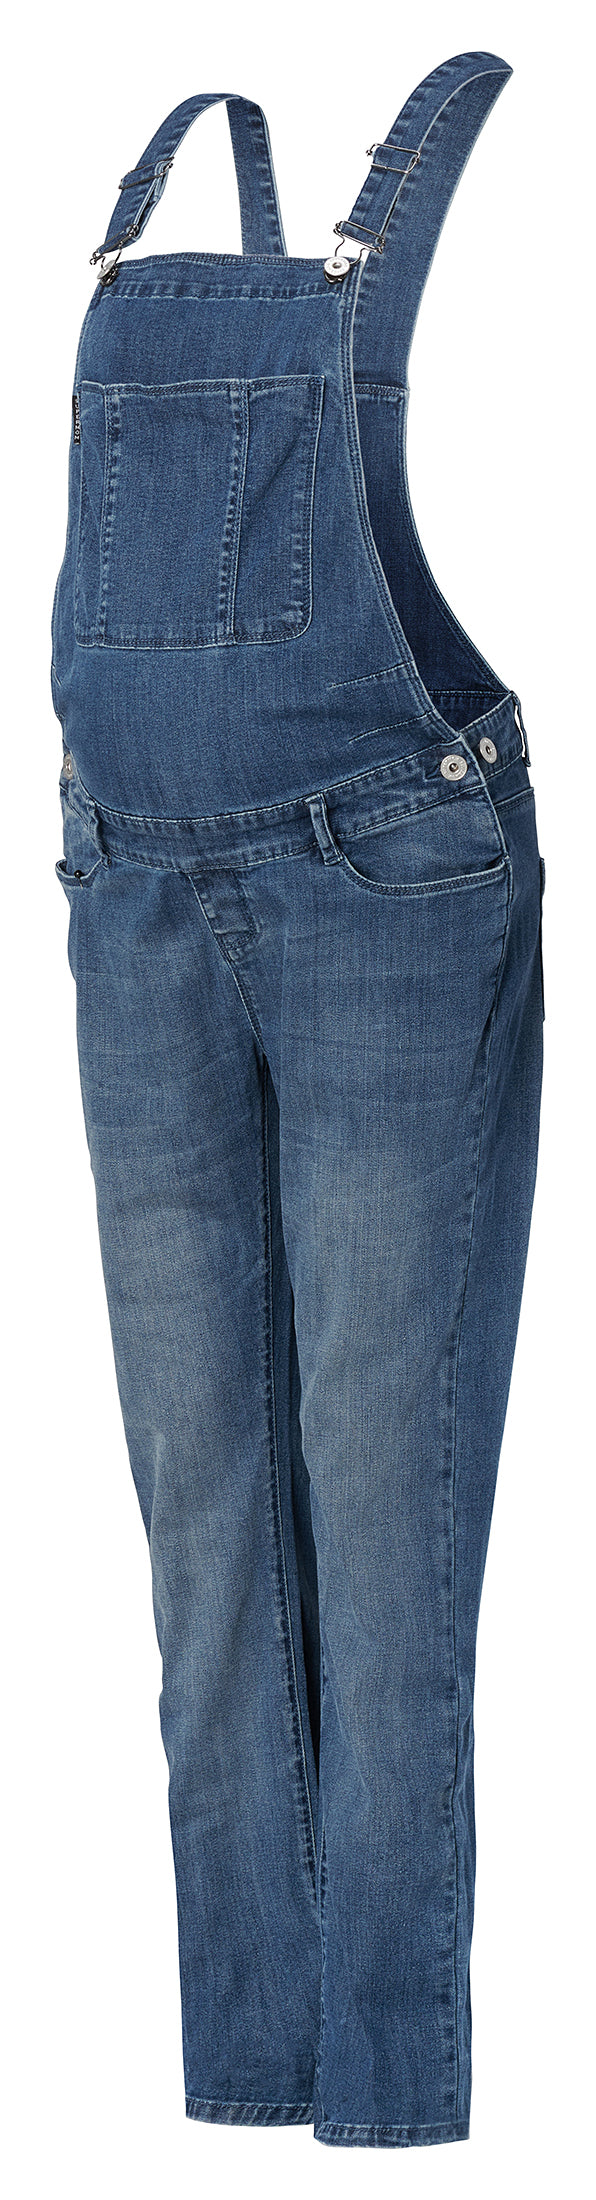 Flared jeans Salopette